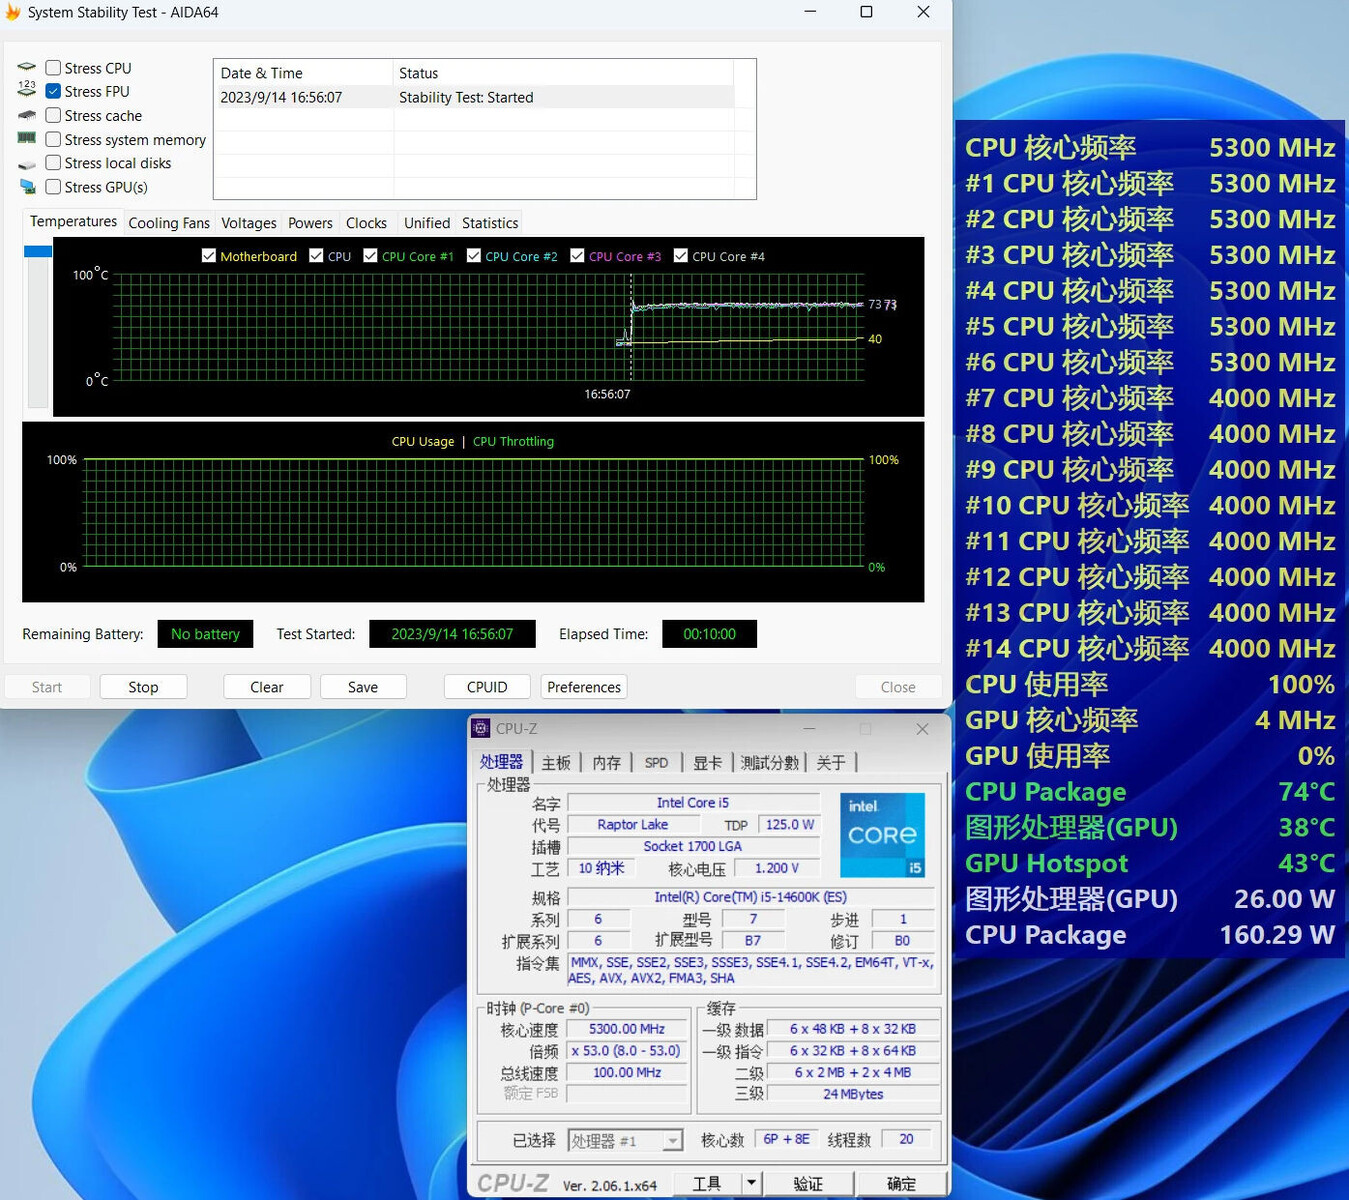 Intel Core i5-14600K Review: Has Intel beaten AMD?